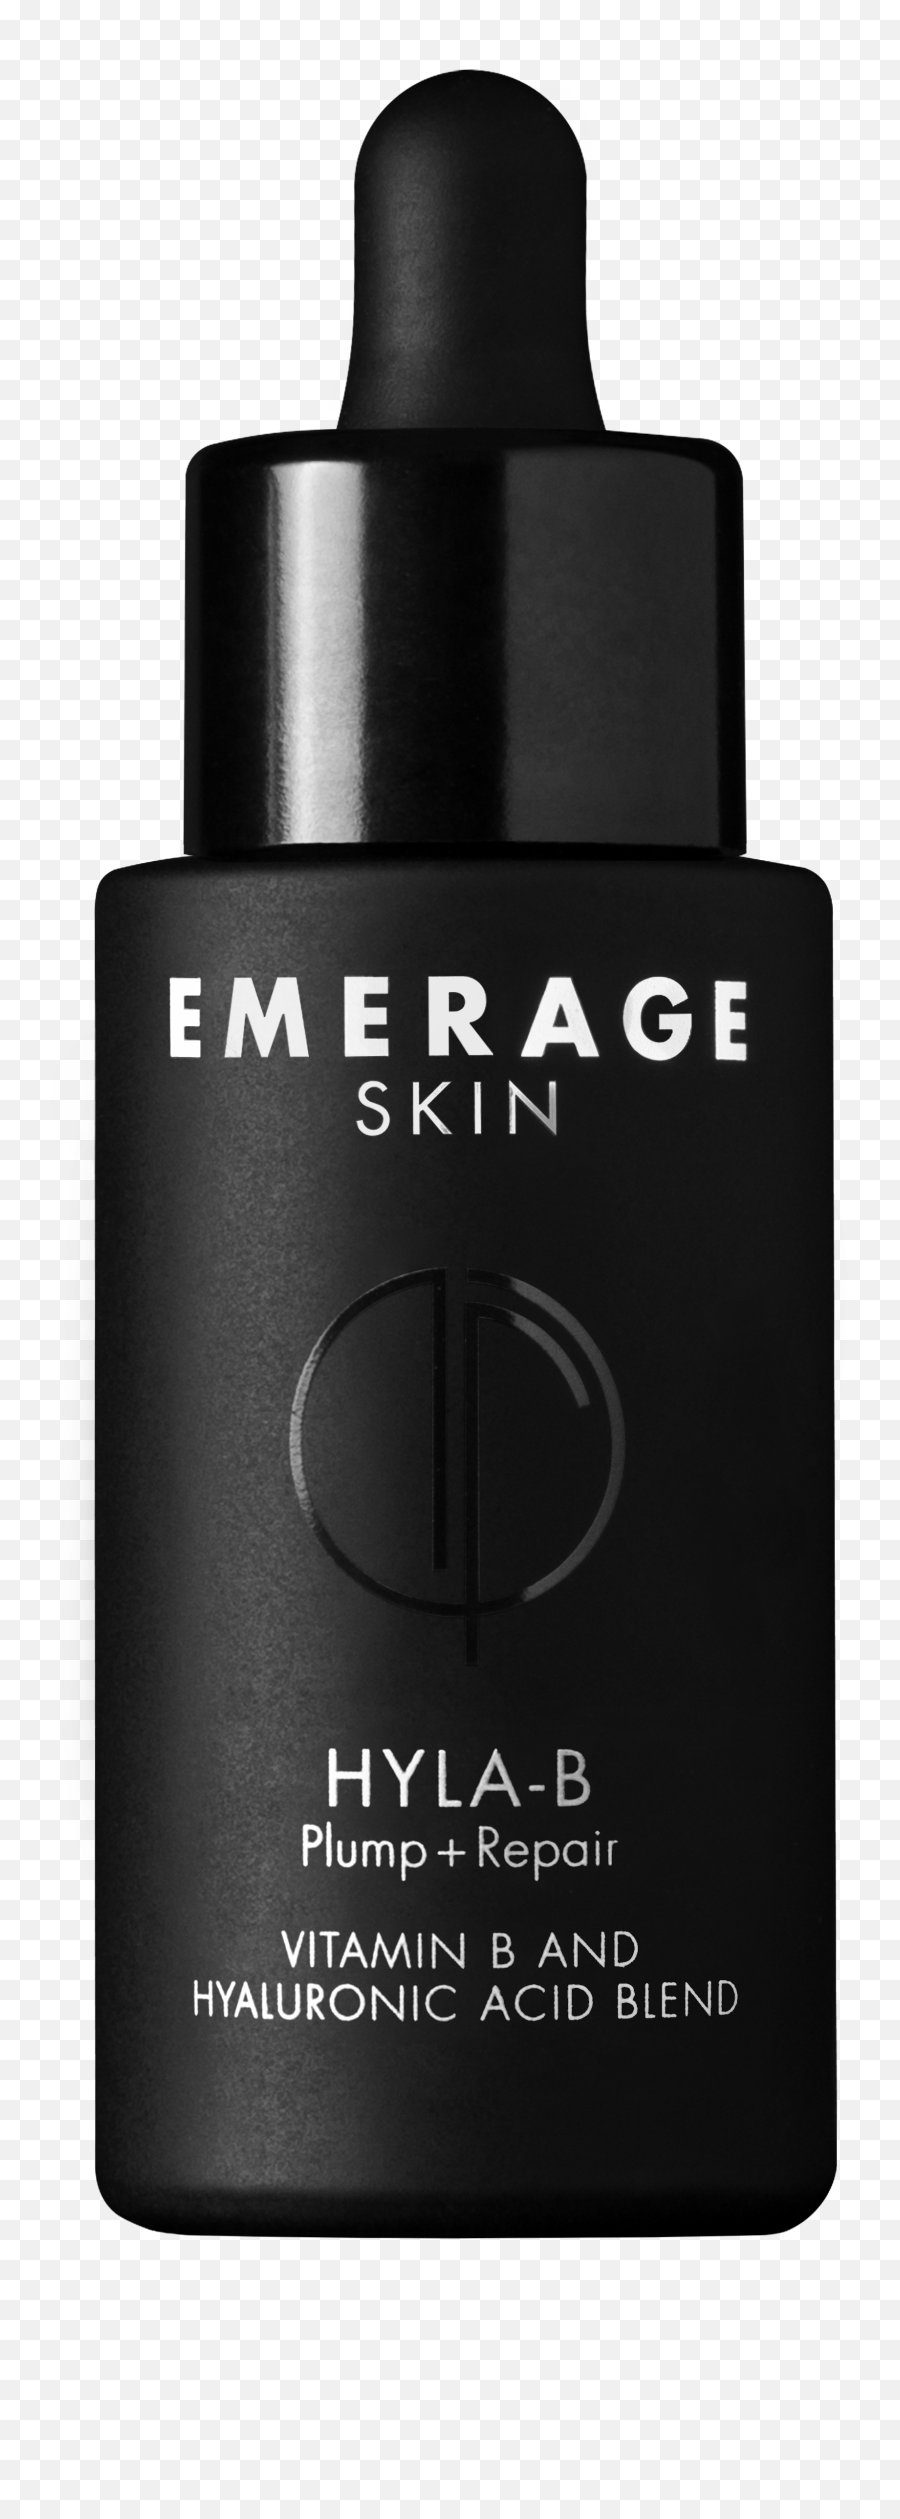 Emerage Skin Emerage Cosmetics Emoji,Apple Lightening Bold Emoji